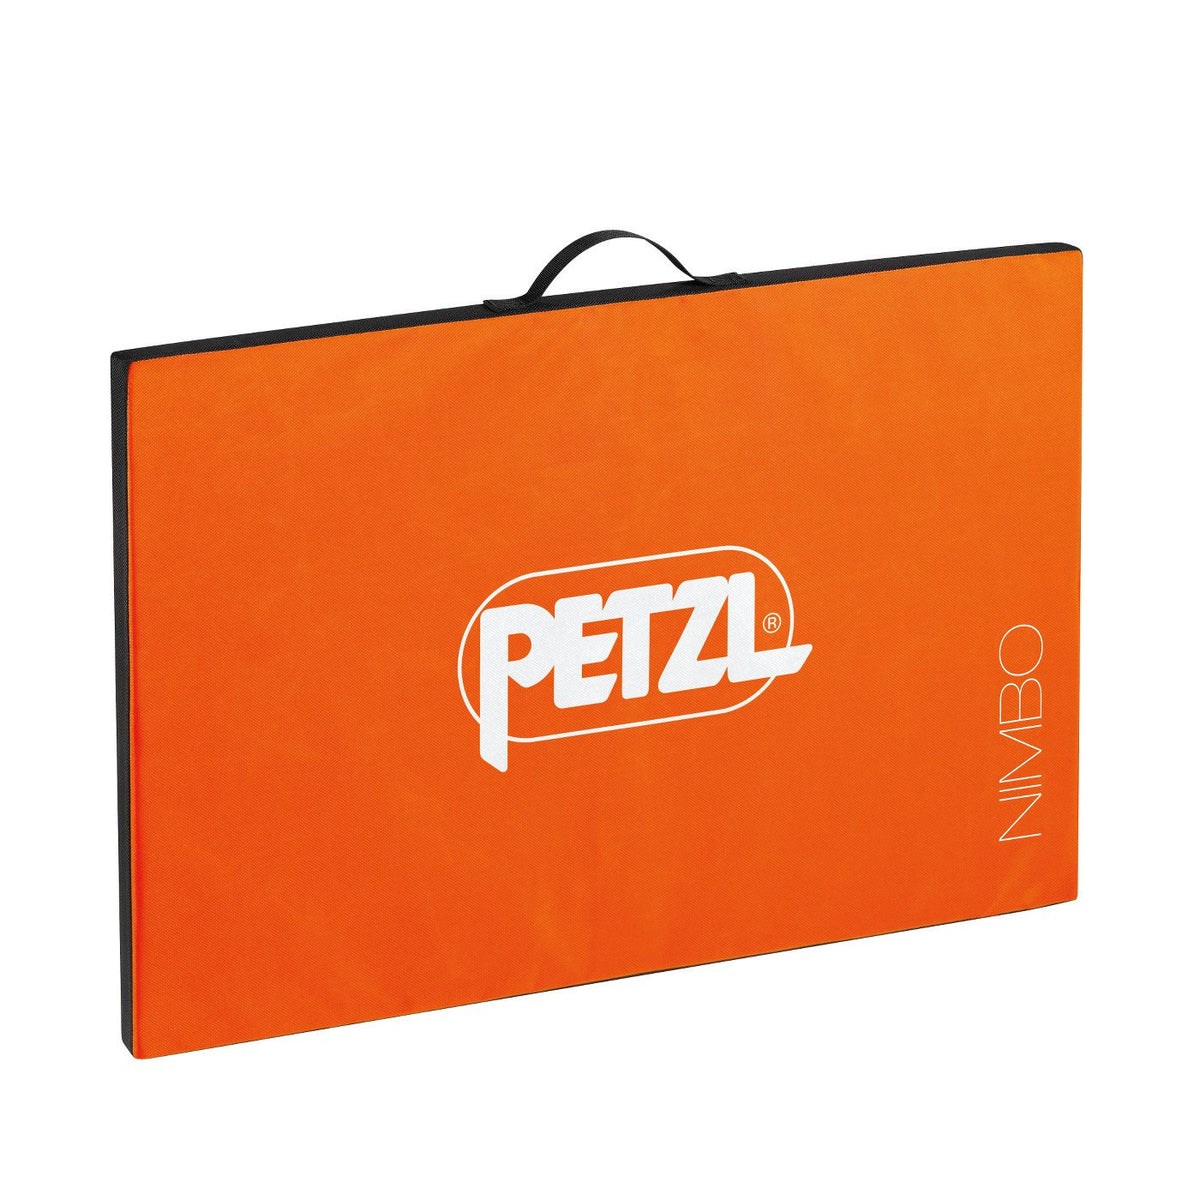 Petzl Nimbo bouldering crash pad, shown open in orange colour